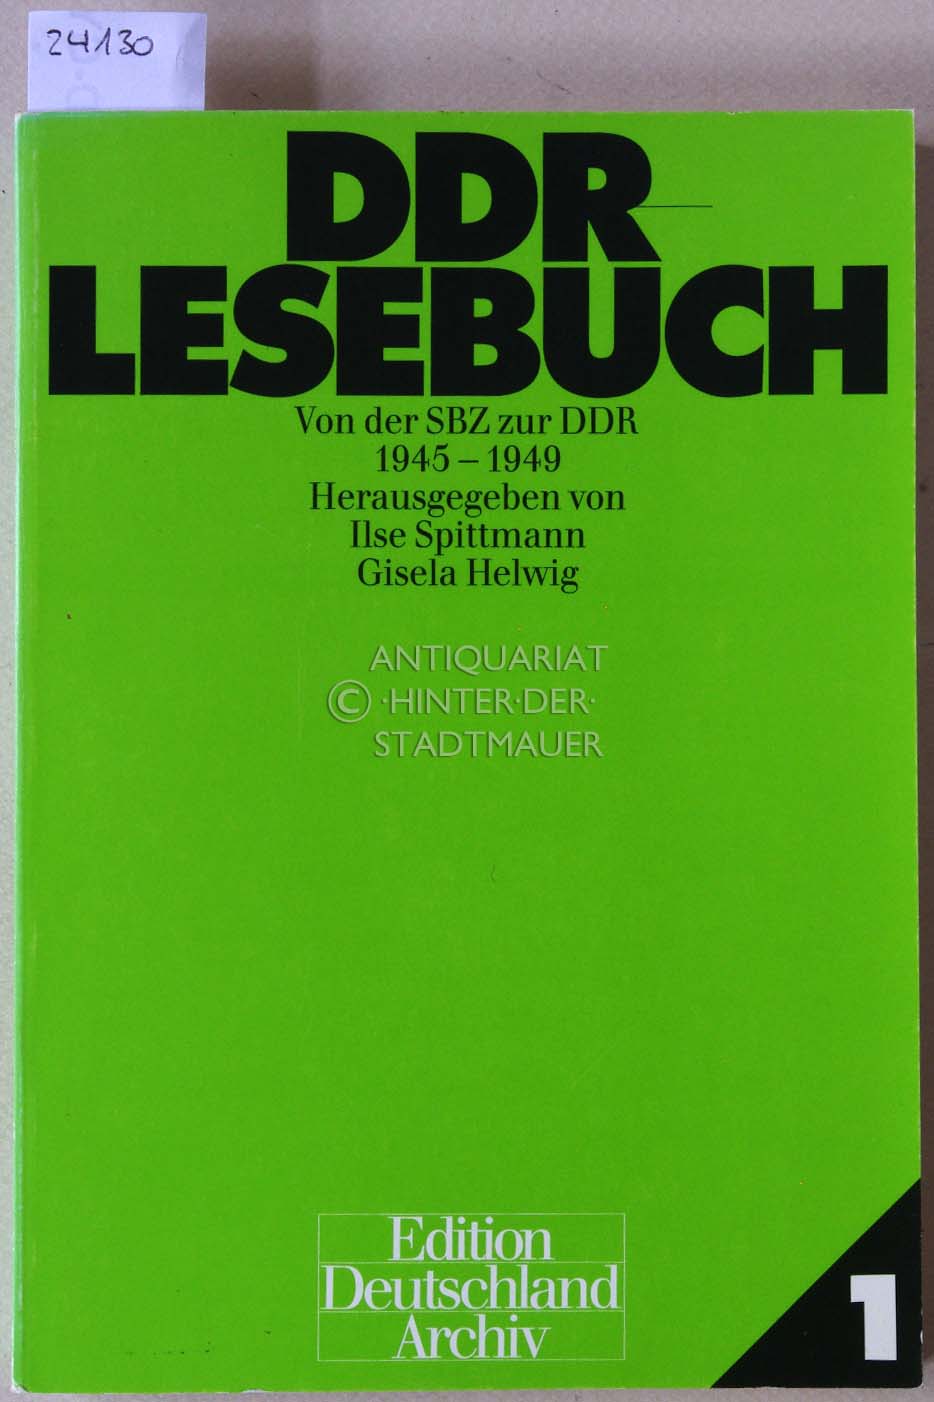 DDR Lesebuch. Von der SBZ zur DDR, 1945-1949. - Spittmann, Ilse (Hrsg.) und Gisela (Hrsg.) Helwig